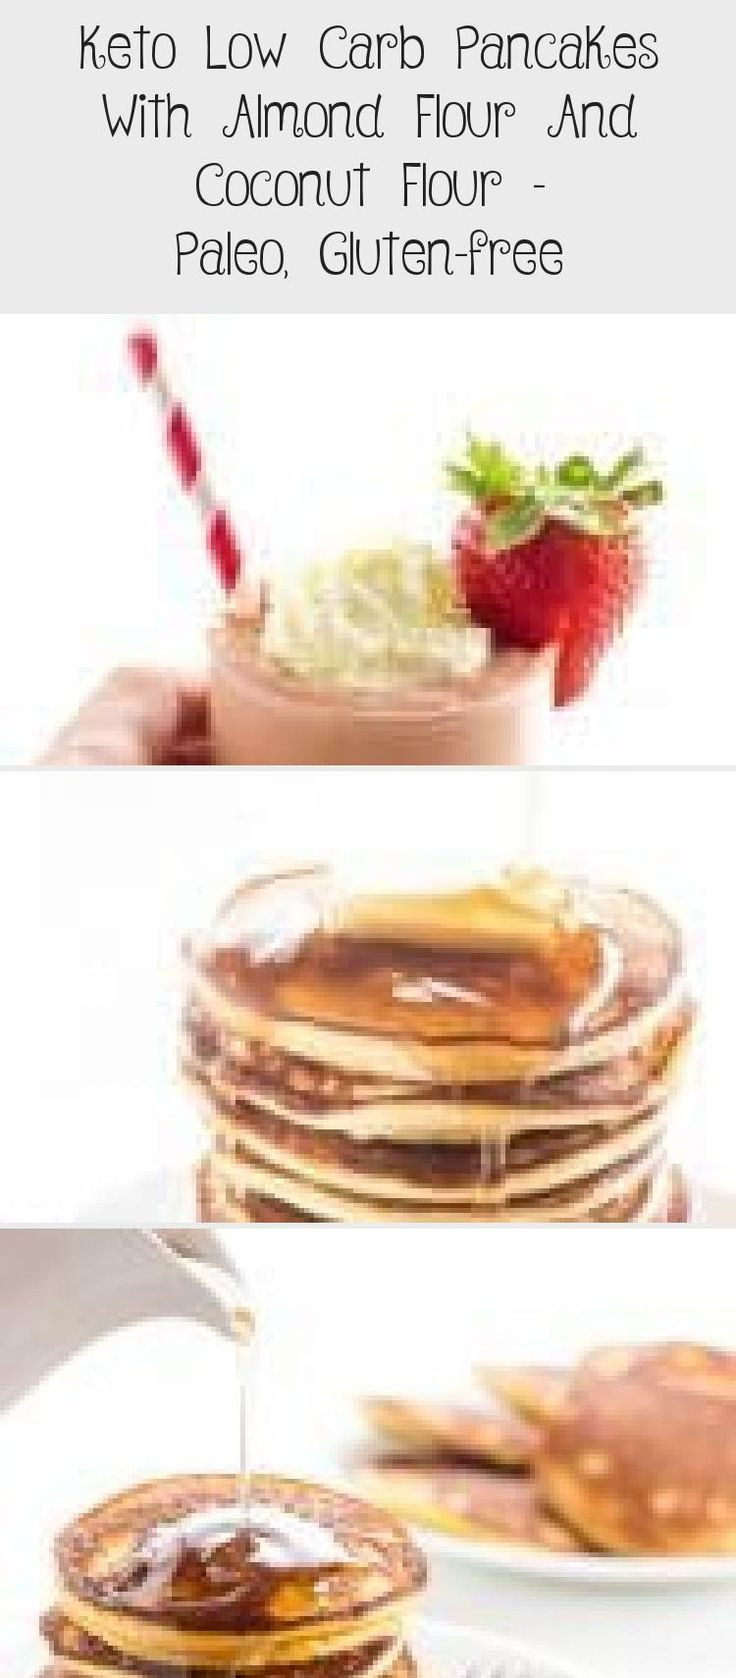 Dairy Free Keto Pancakes Almond Flour
 Keto Low Carb Pancakes With Almond Flour And Coconut Flour